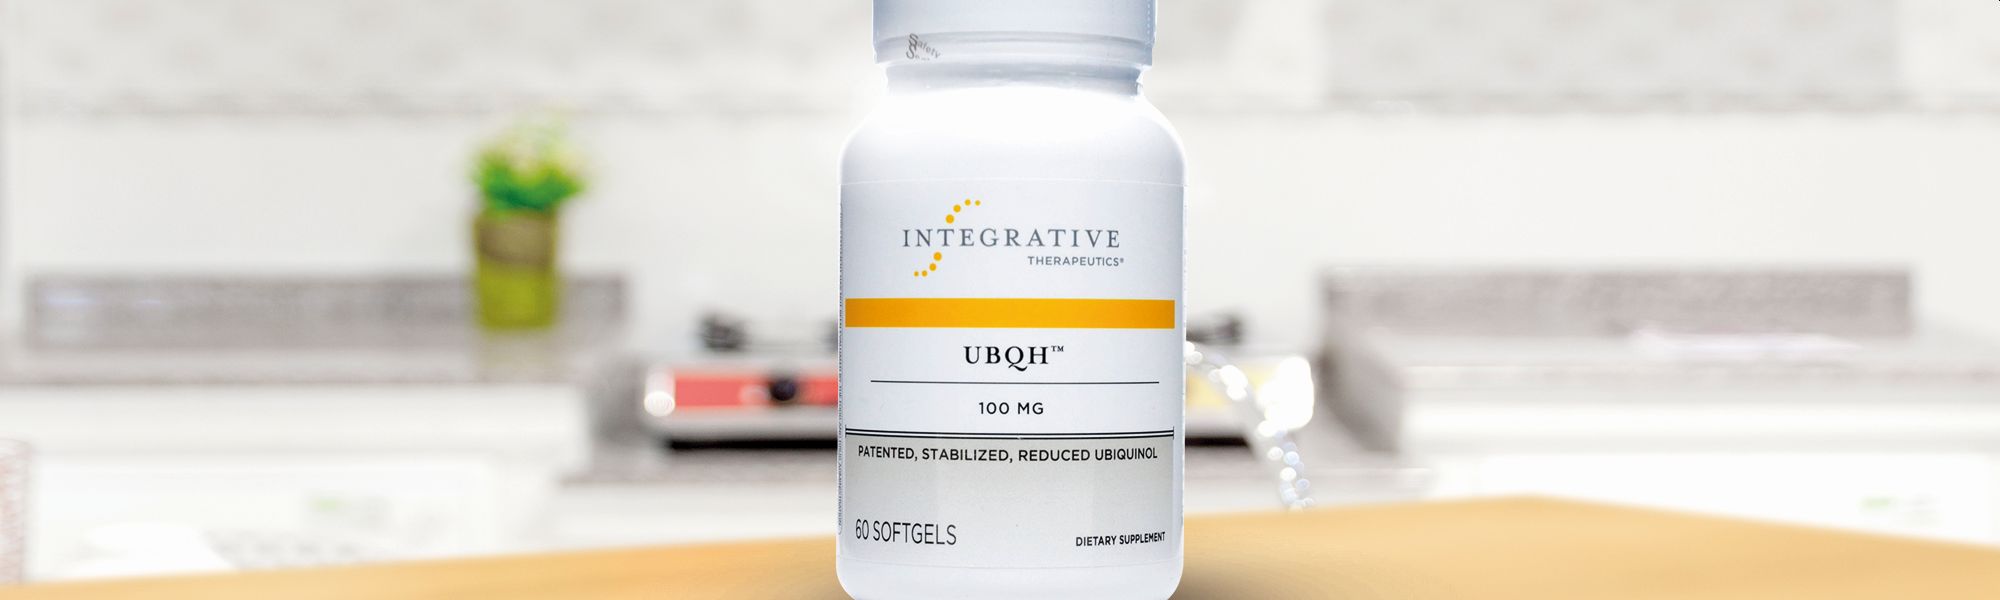 Integrative Therapeutics UBQH Review